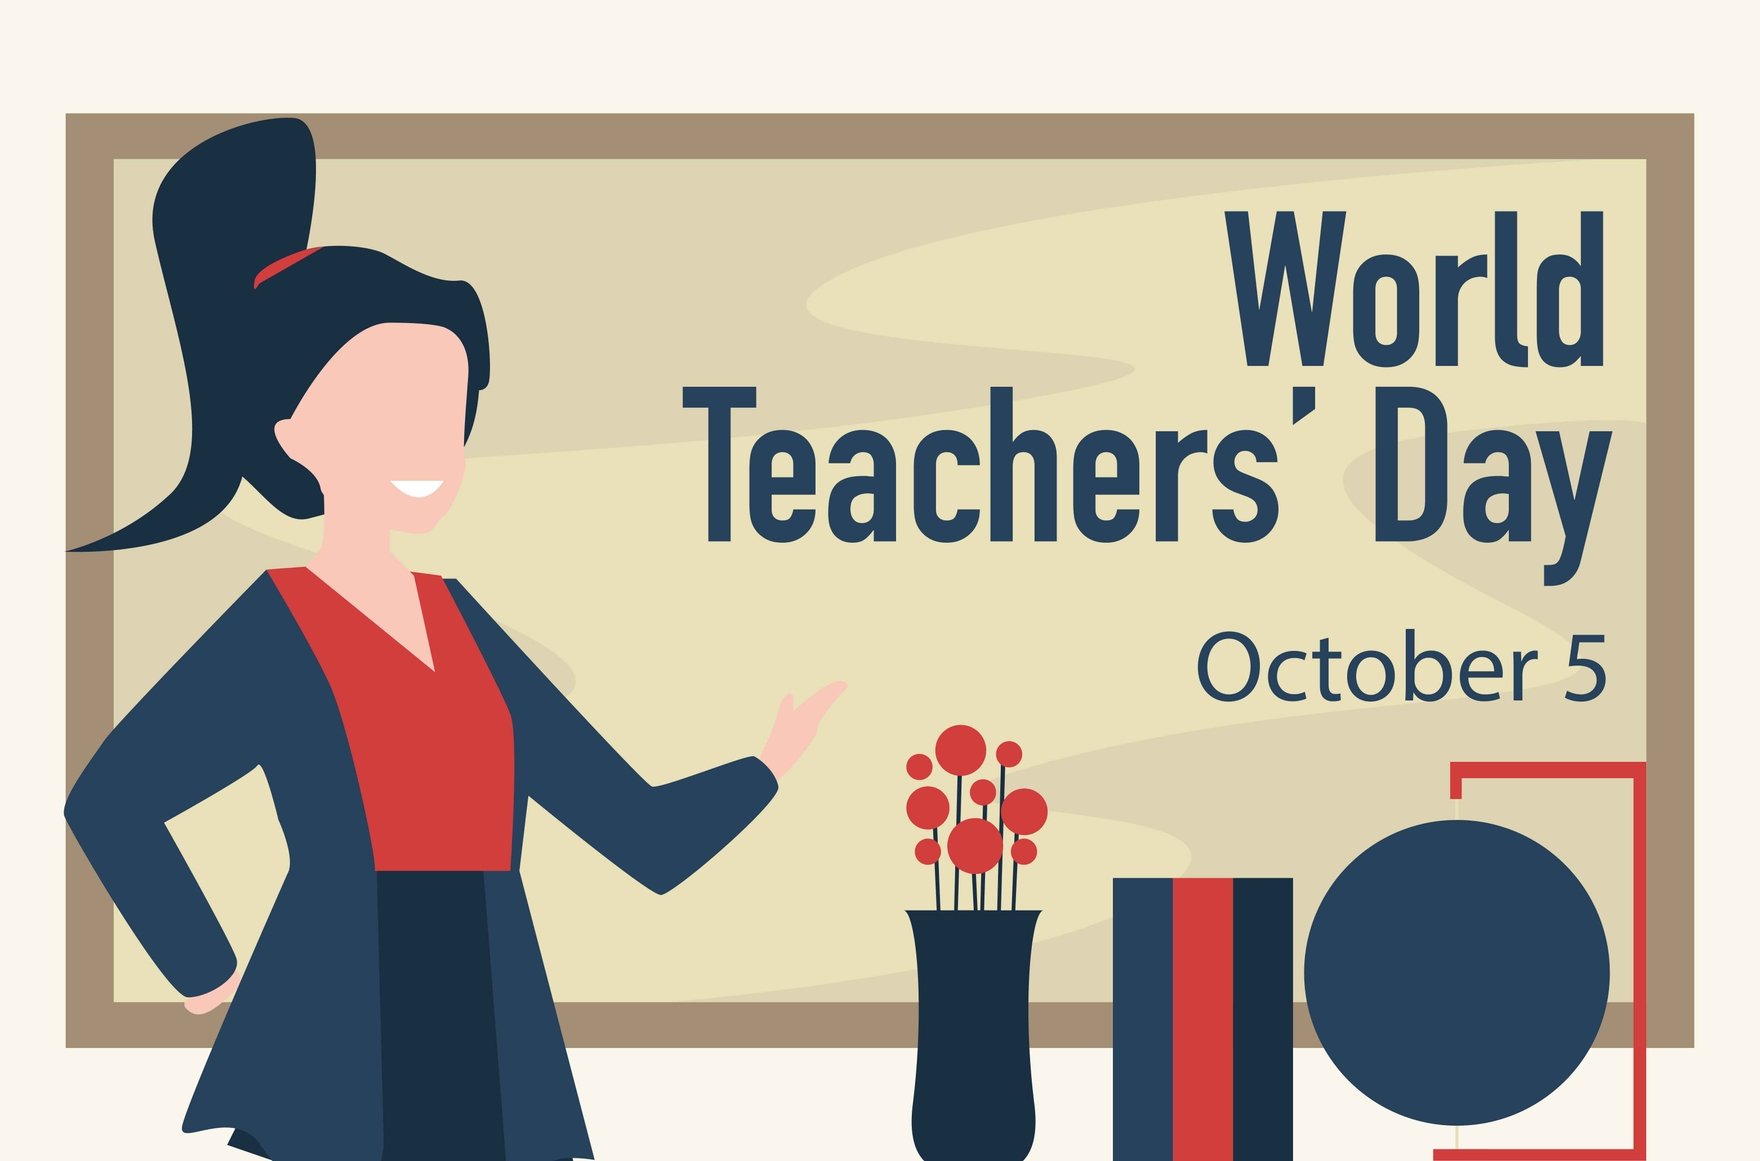 Cartoon Teachers Day Banner Template - Google Docs, Illustrator, Word, PSD,  Publisher 